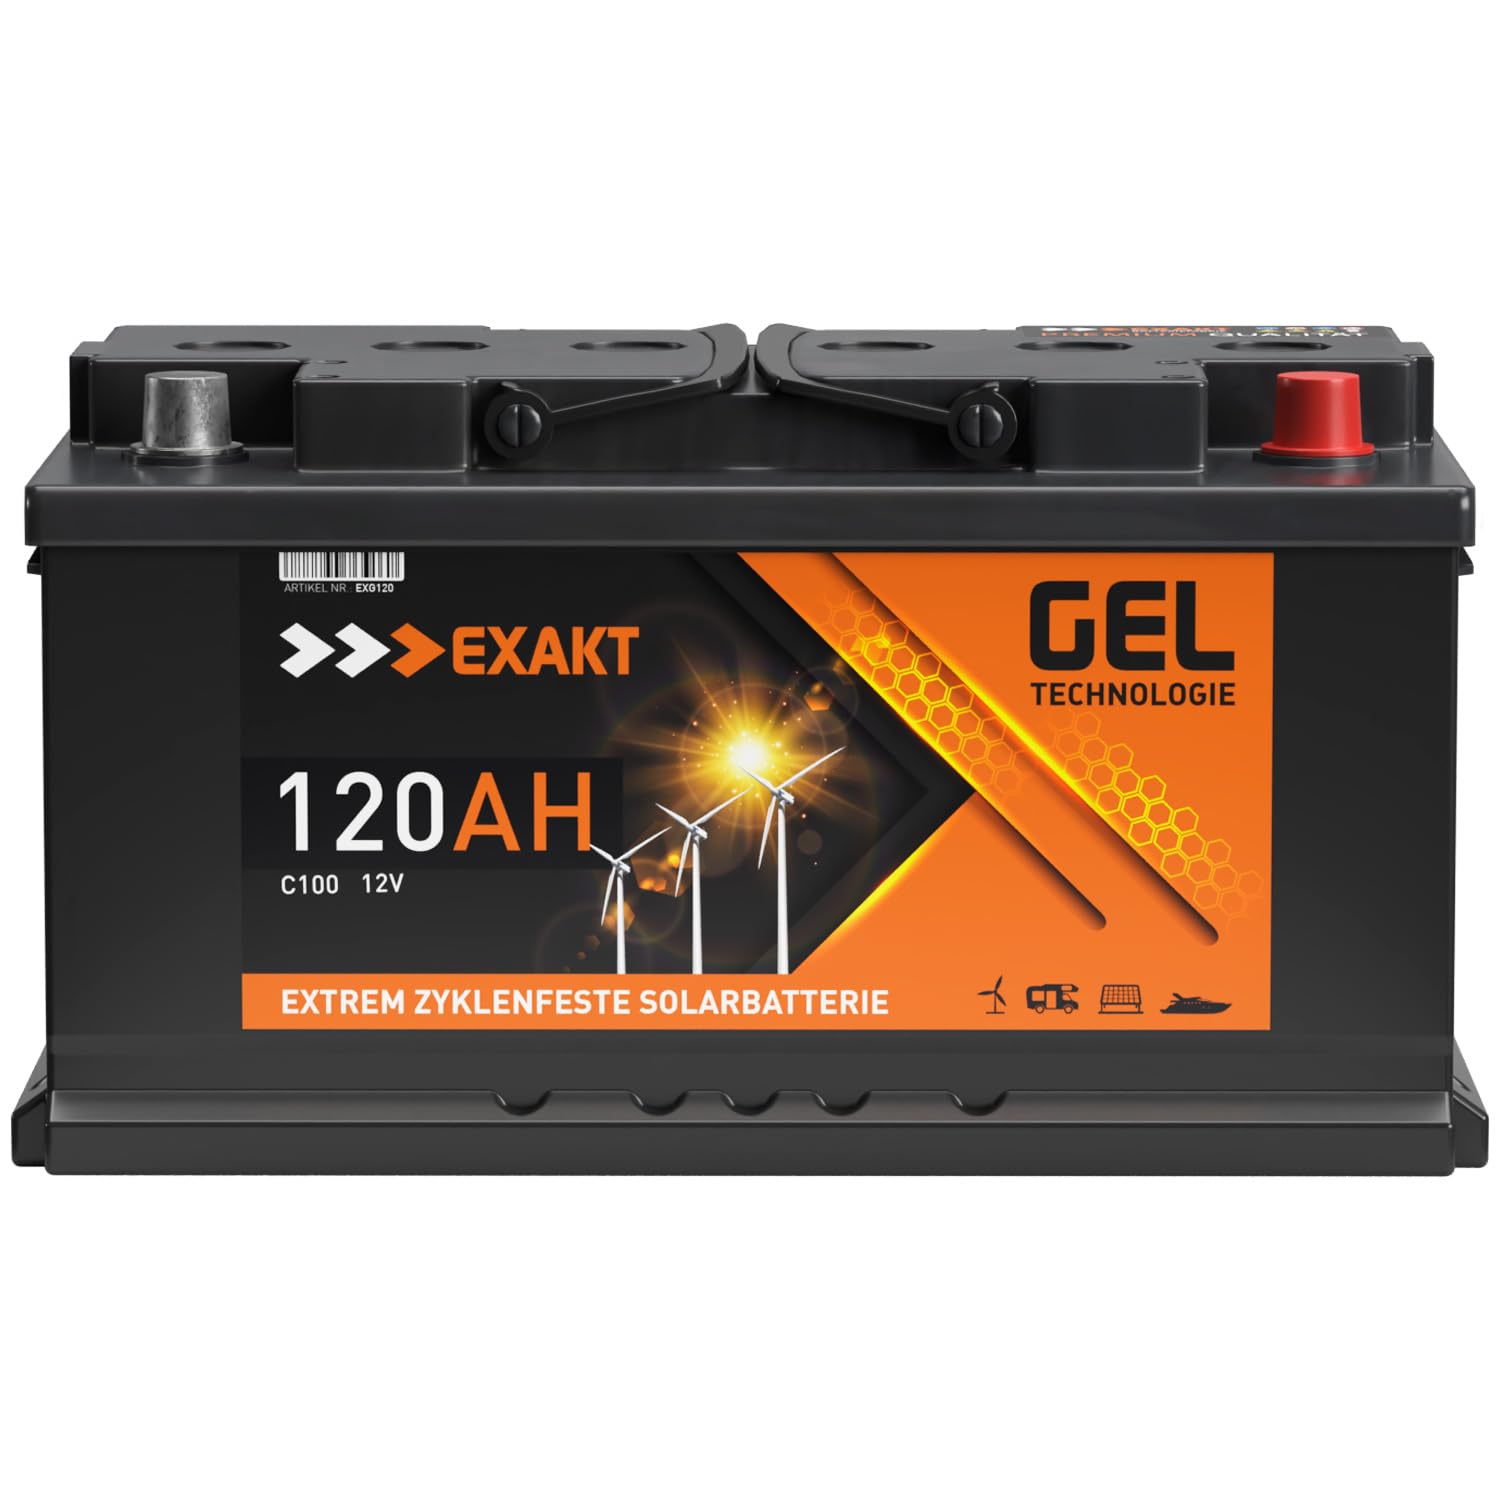 EXAKT GEL Batterie 12V 120Ah Solarbatterie Wohnmobil Batterie Versorgung Bootsbatterie Gelbatterie Gel Akku ersetzt 100Ah 110Ah von Exakt